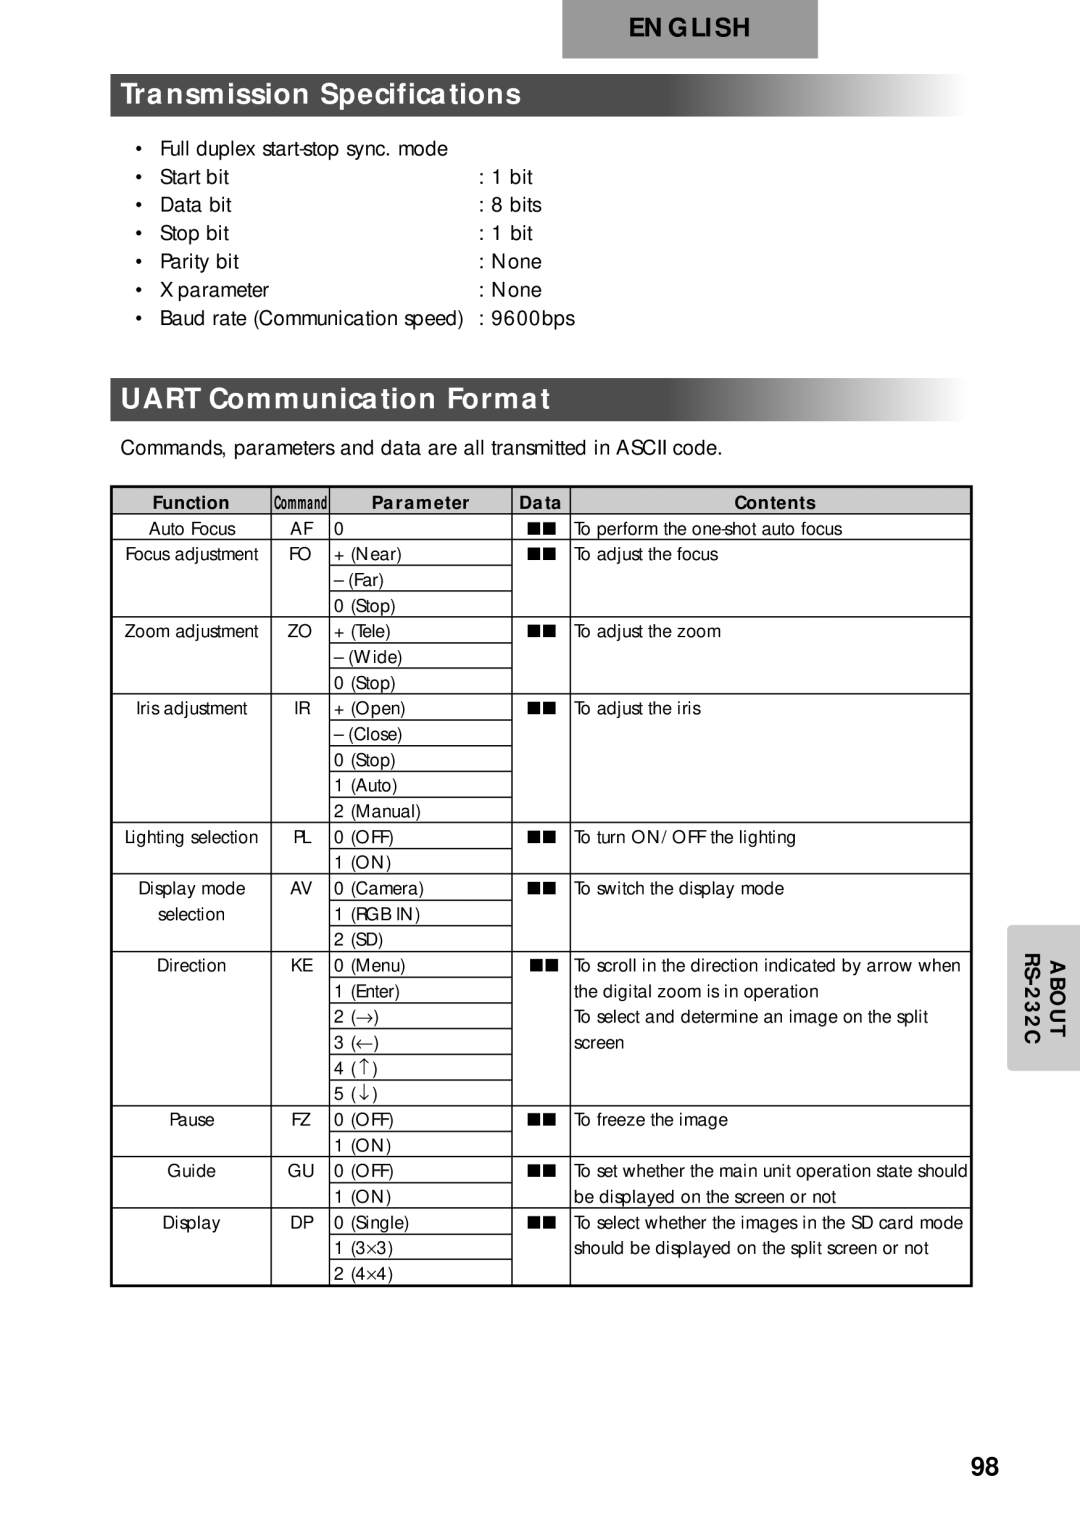 Elmo p10 instruction manual Transmission Specifications, UART Communication Format, English 